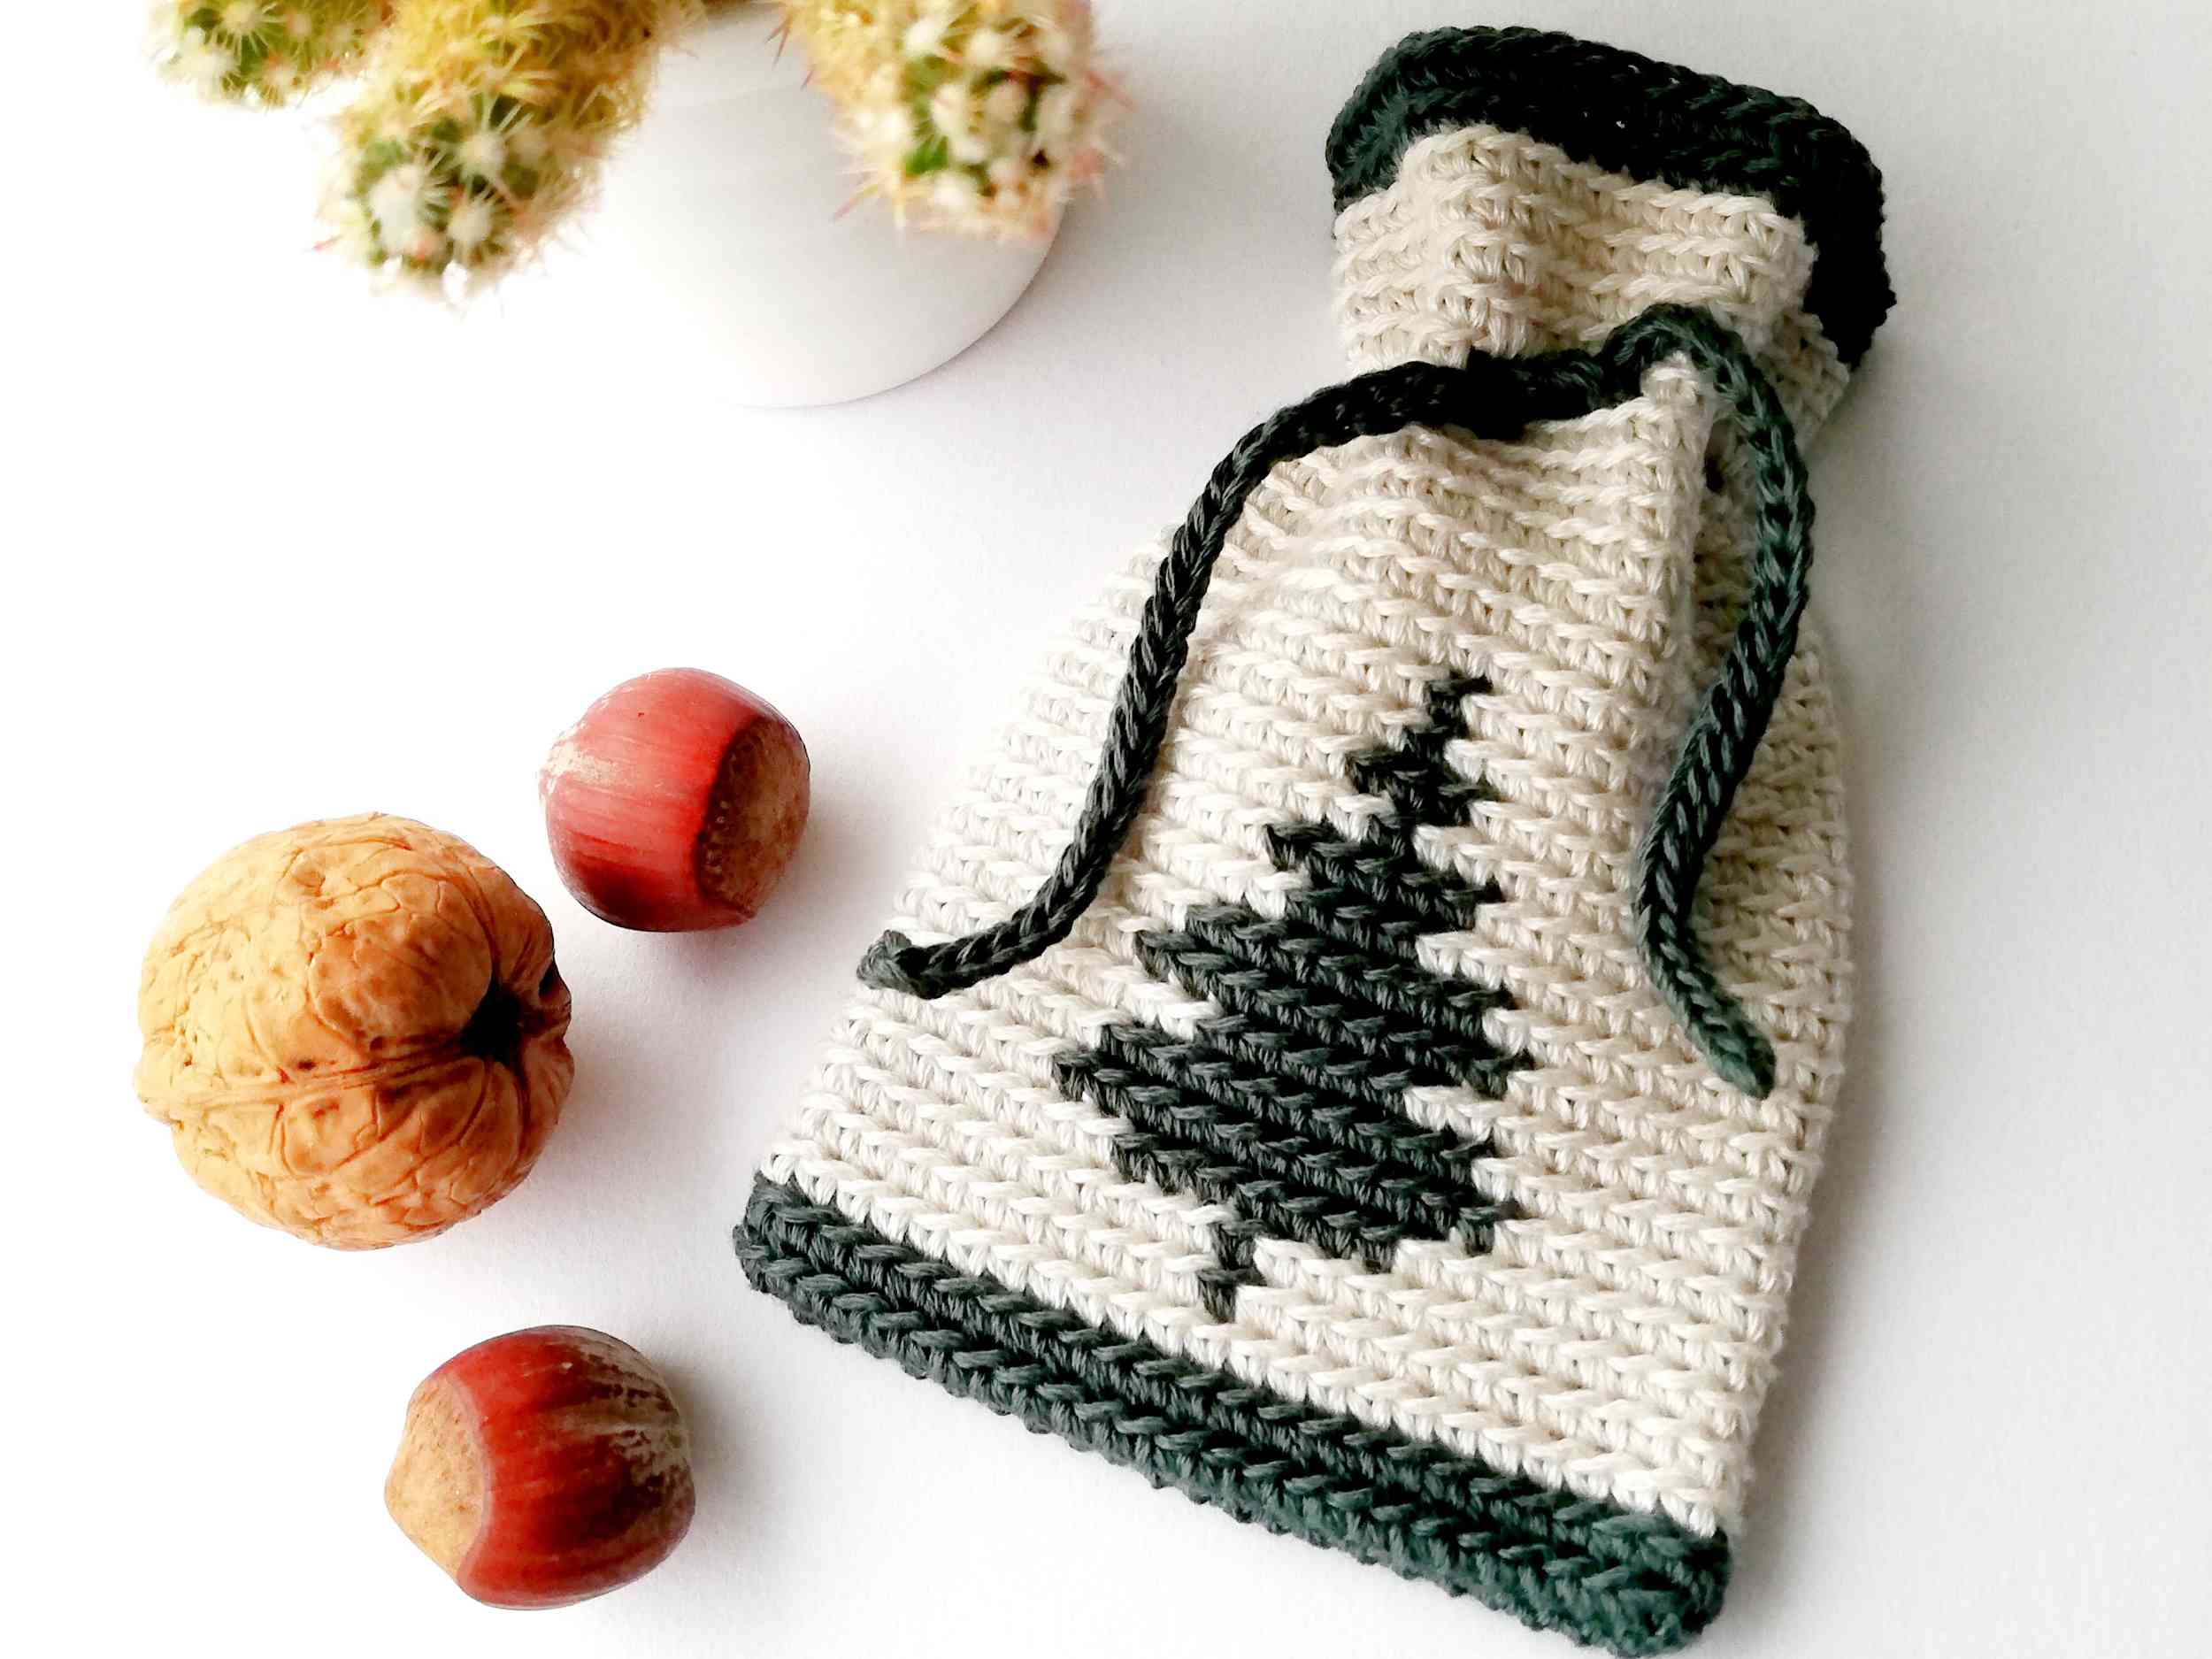 Drawstring bag with a Christmas tree